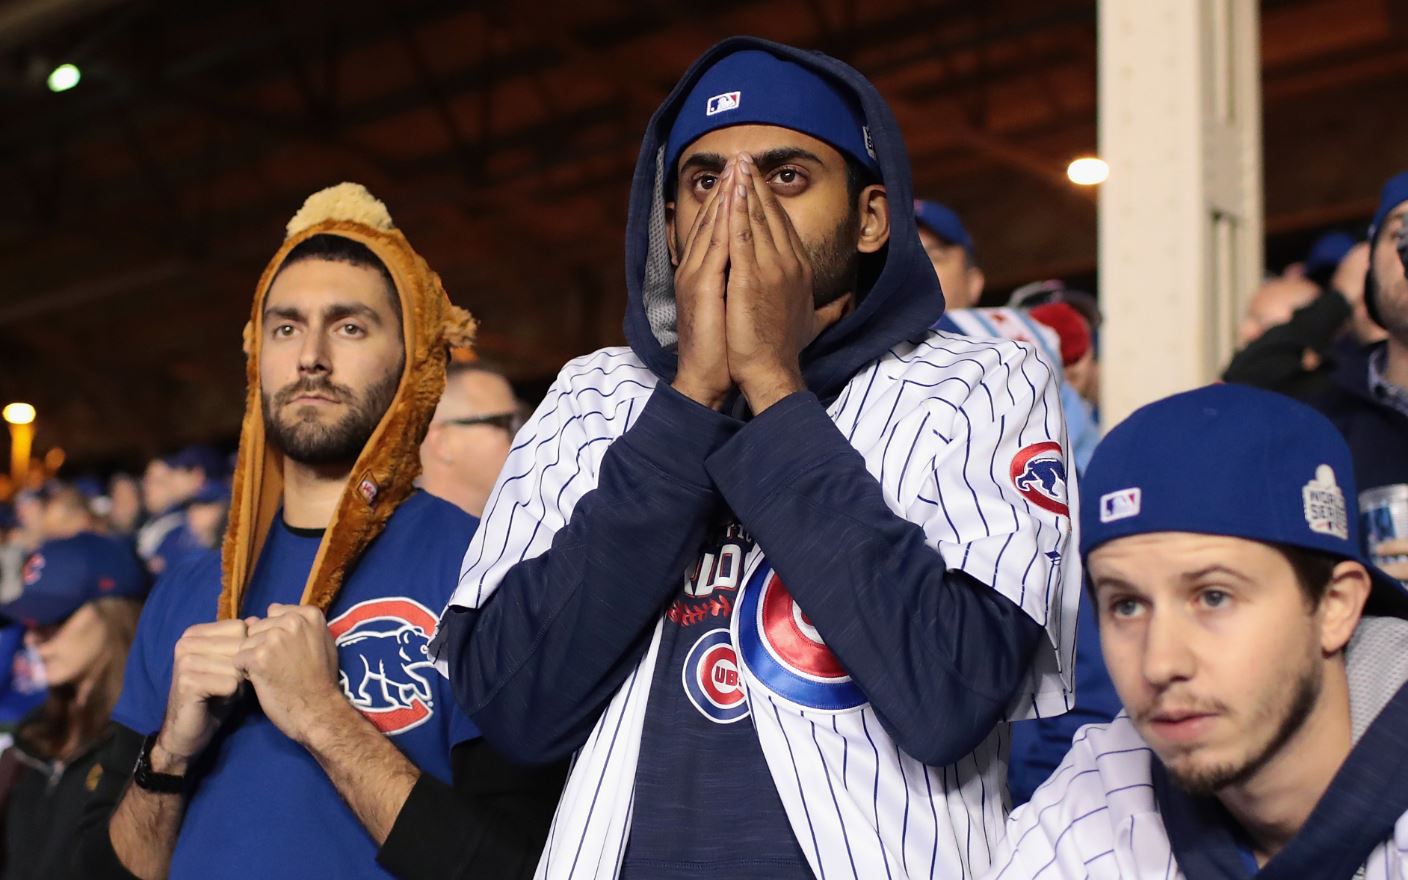 Fox World Series announcer Joe Buck continues his Cubs' lovefest